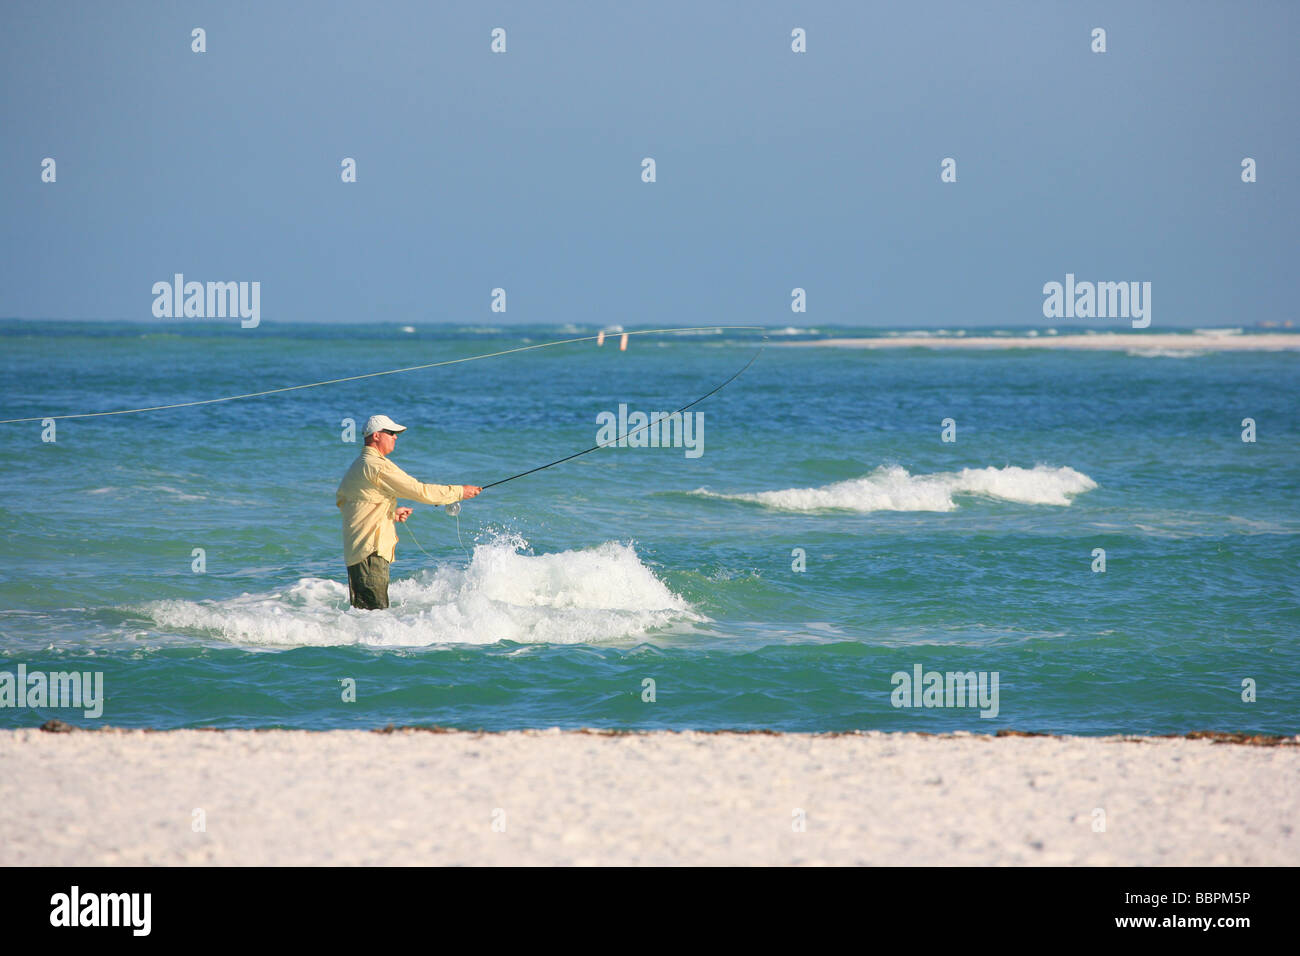 Pêche Surf Casting Anna Maria Island Floride Golfe du Mexique, la pêche sportive Banque D'Images